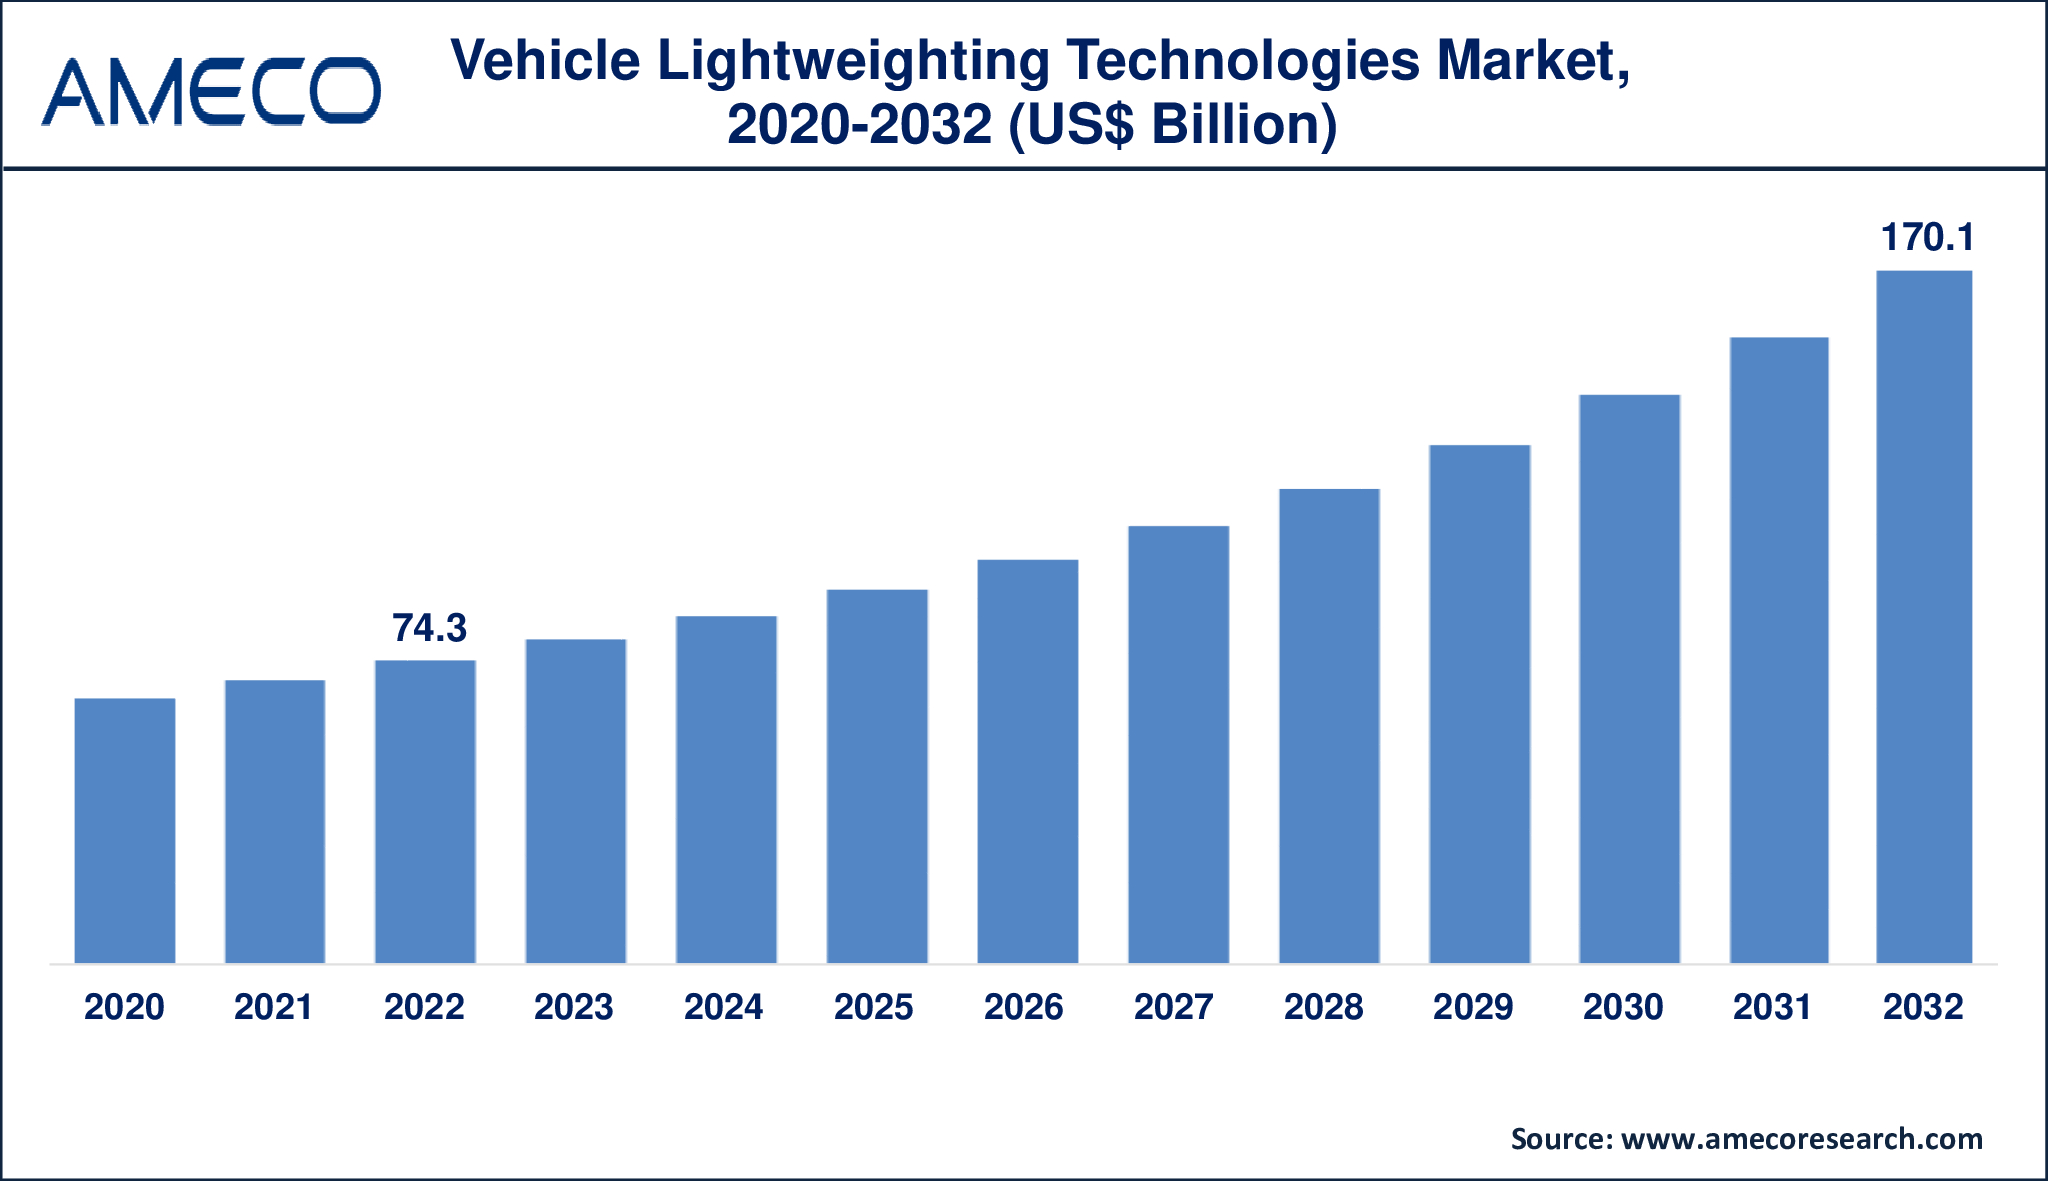 Vehicle Lightweighting Technologies Market Dynamics